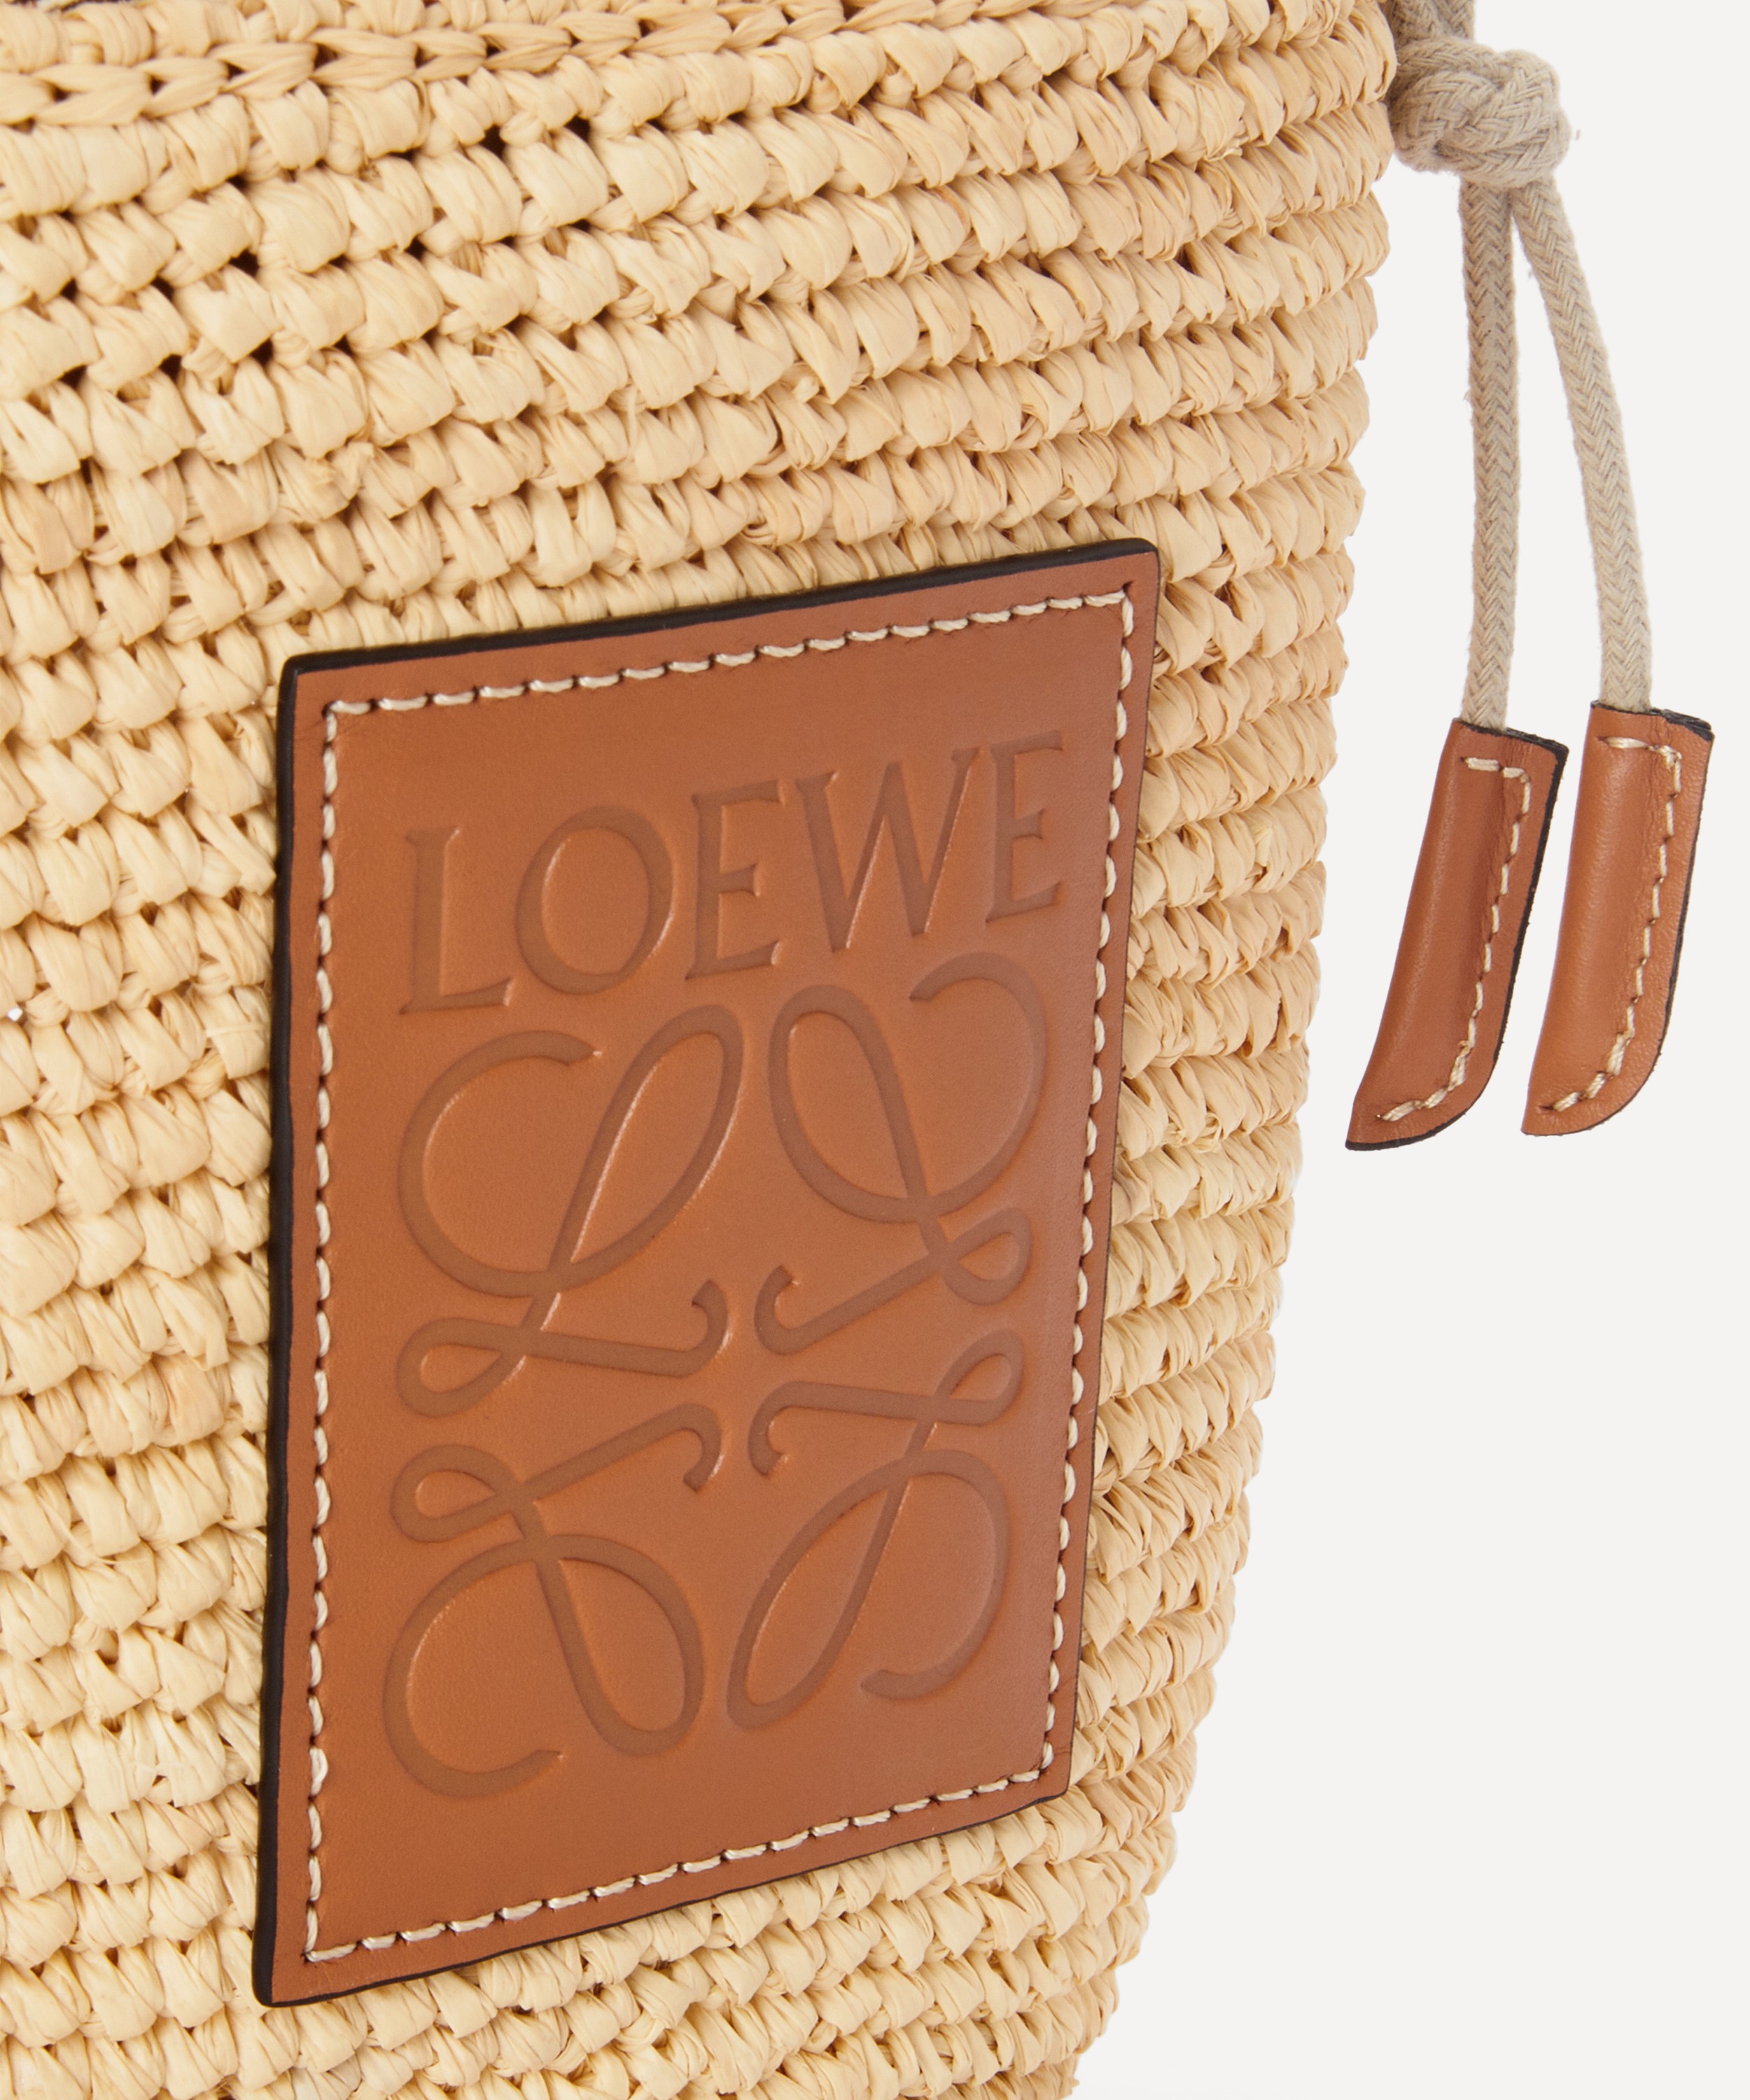 The Loewe X Paula's Ibiza Pochette Basket Bag